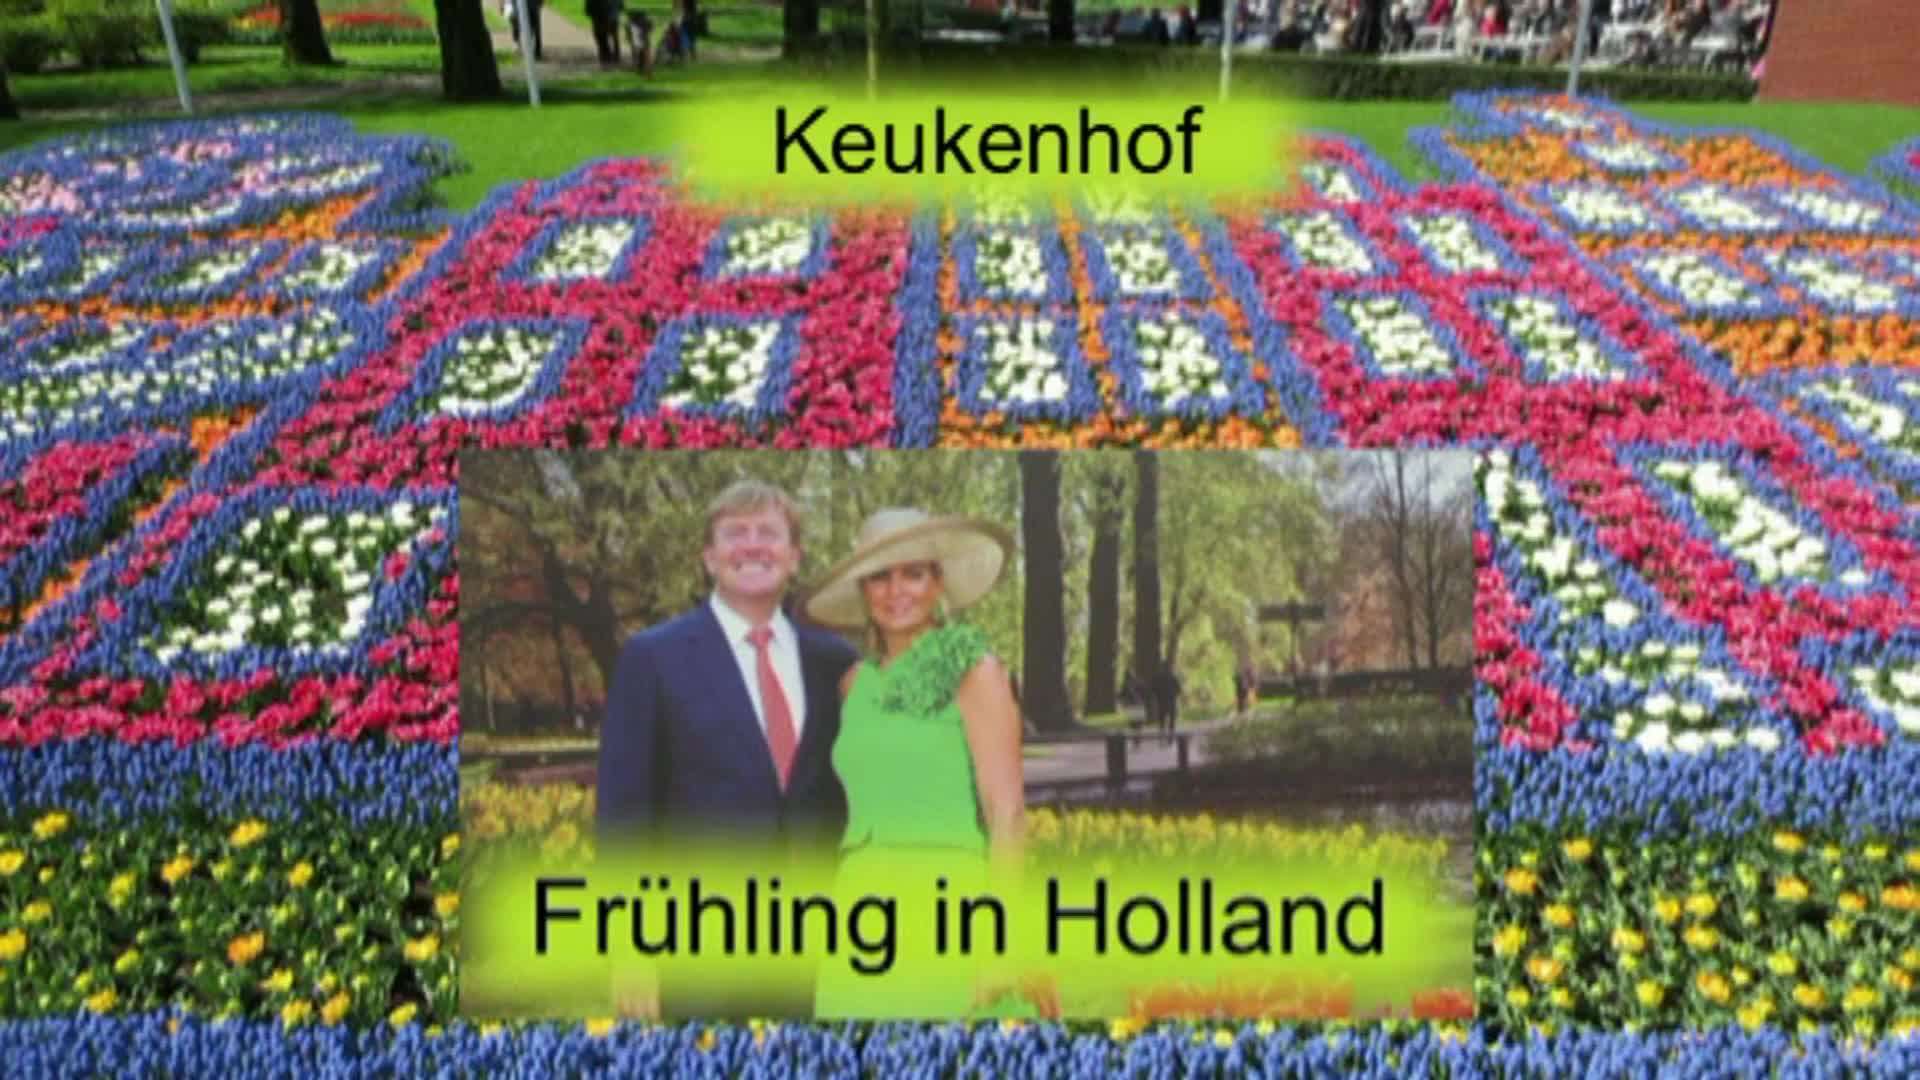 Frühling in Holland (5) Keukenhof